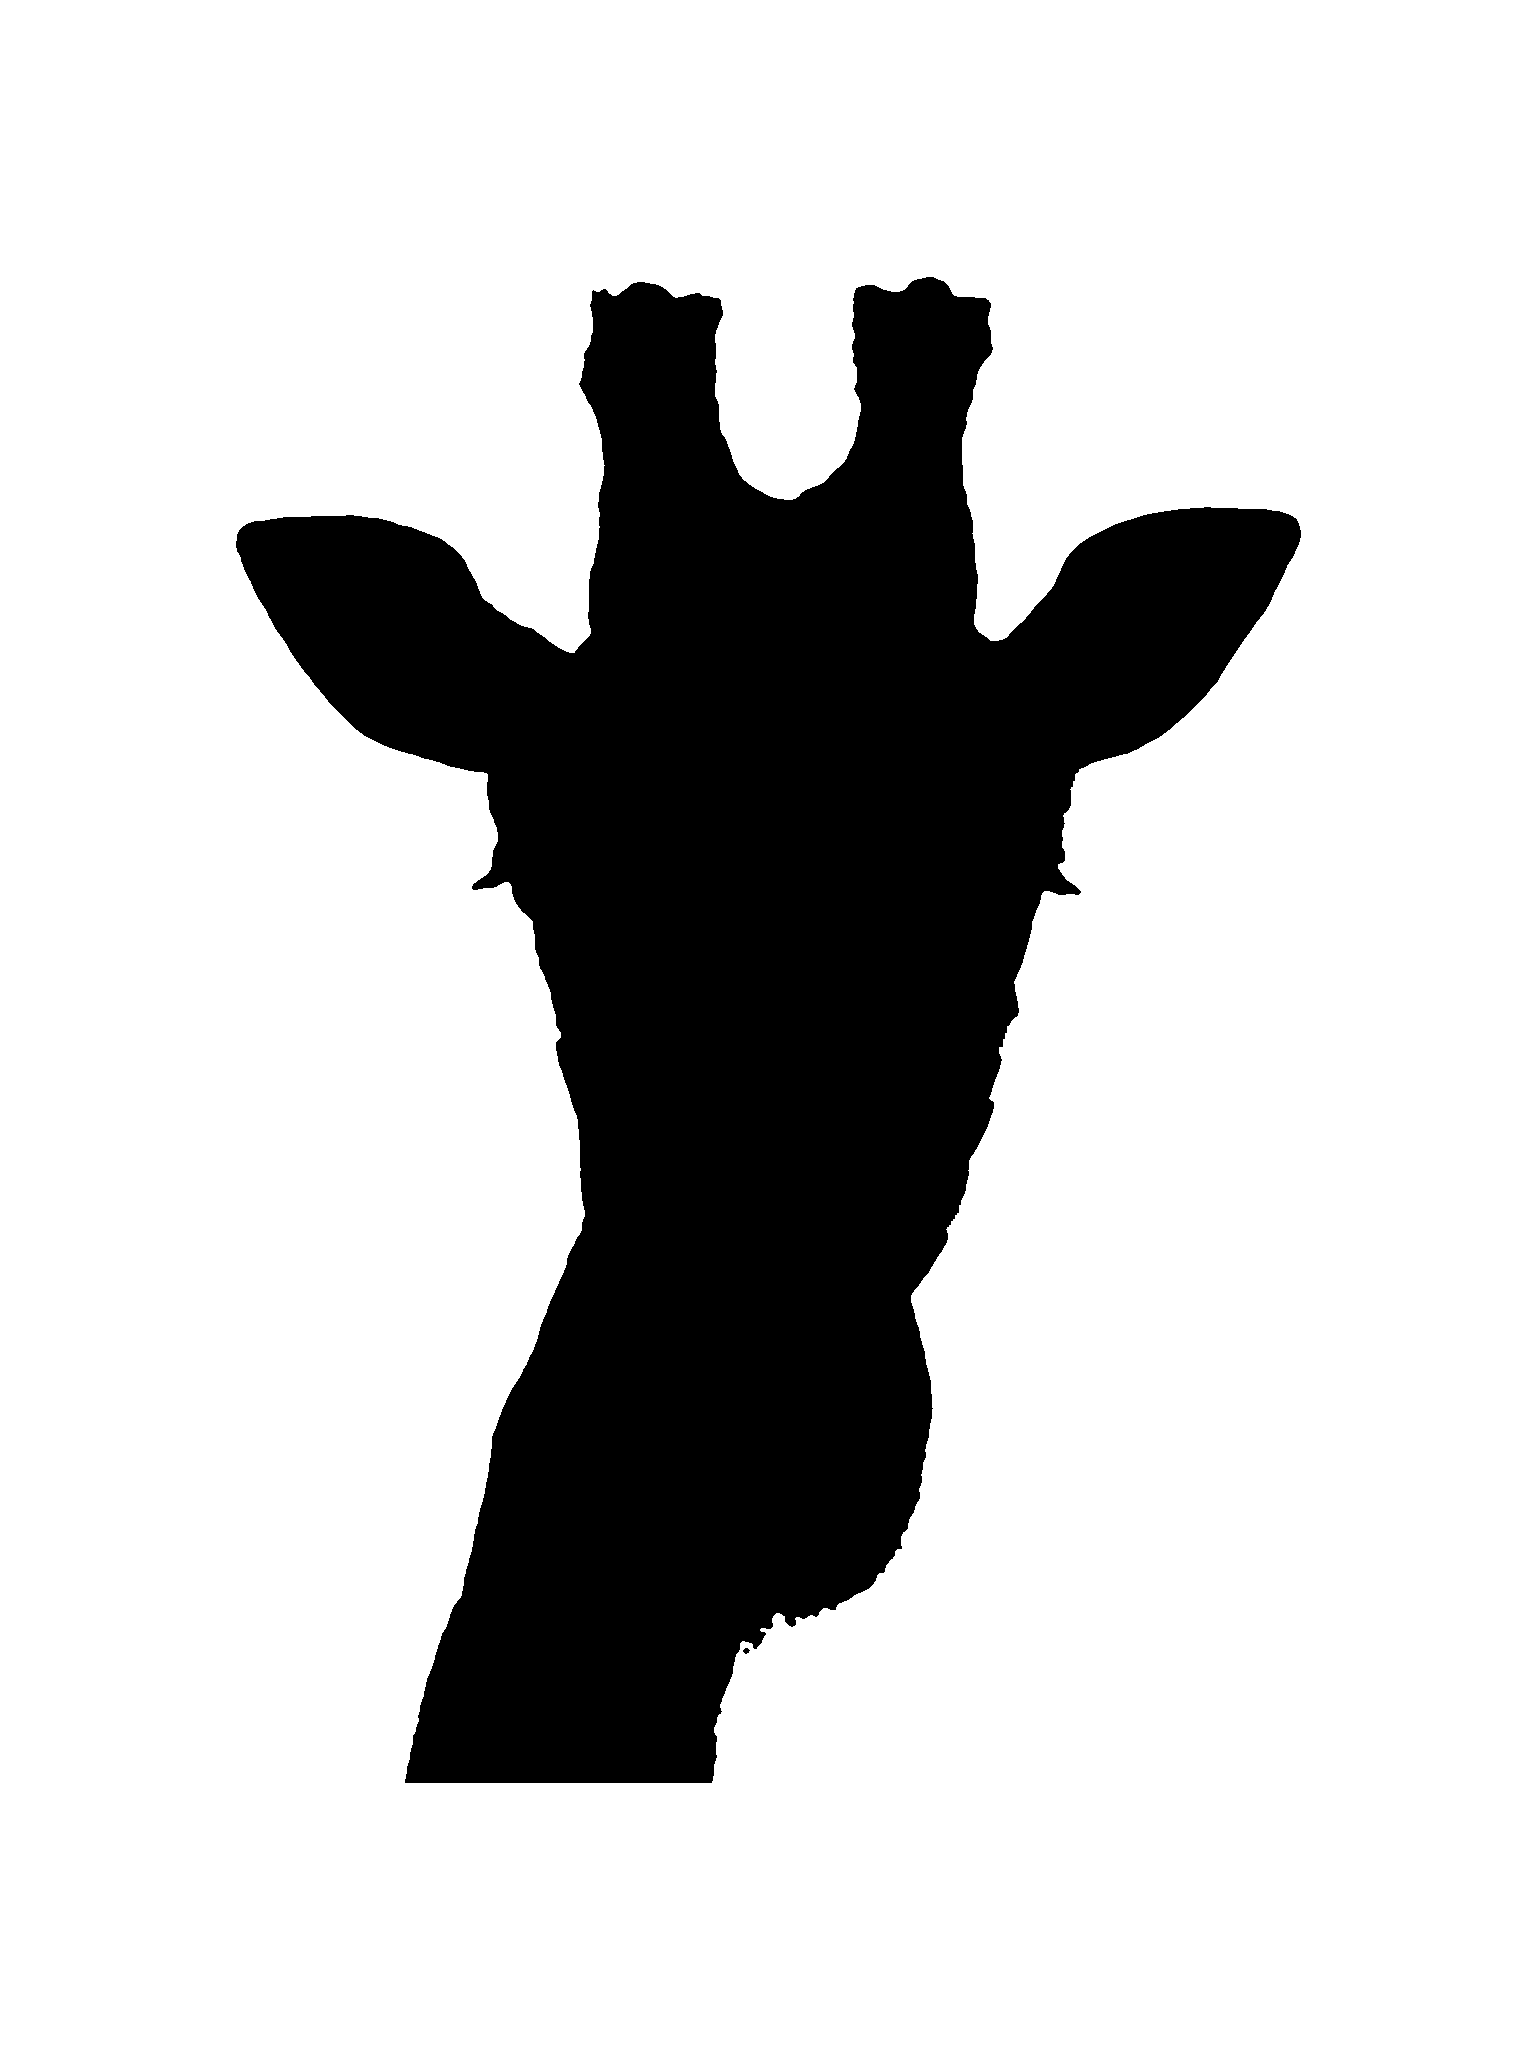 Giraffe Silhouette Nursery | Clipart Panda - Free Clipart Images